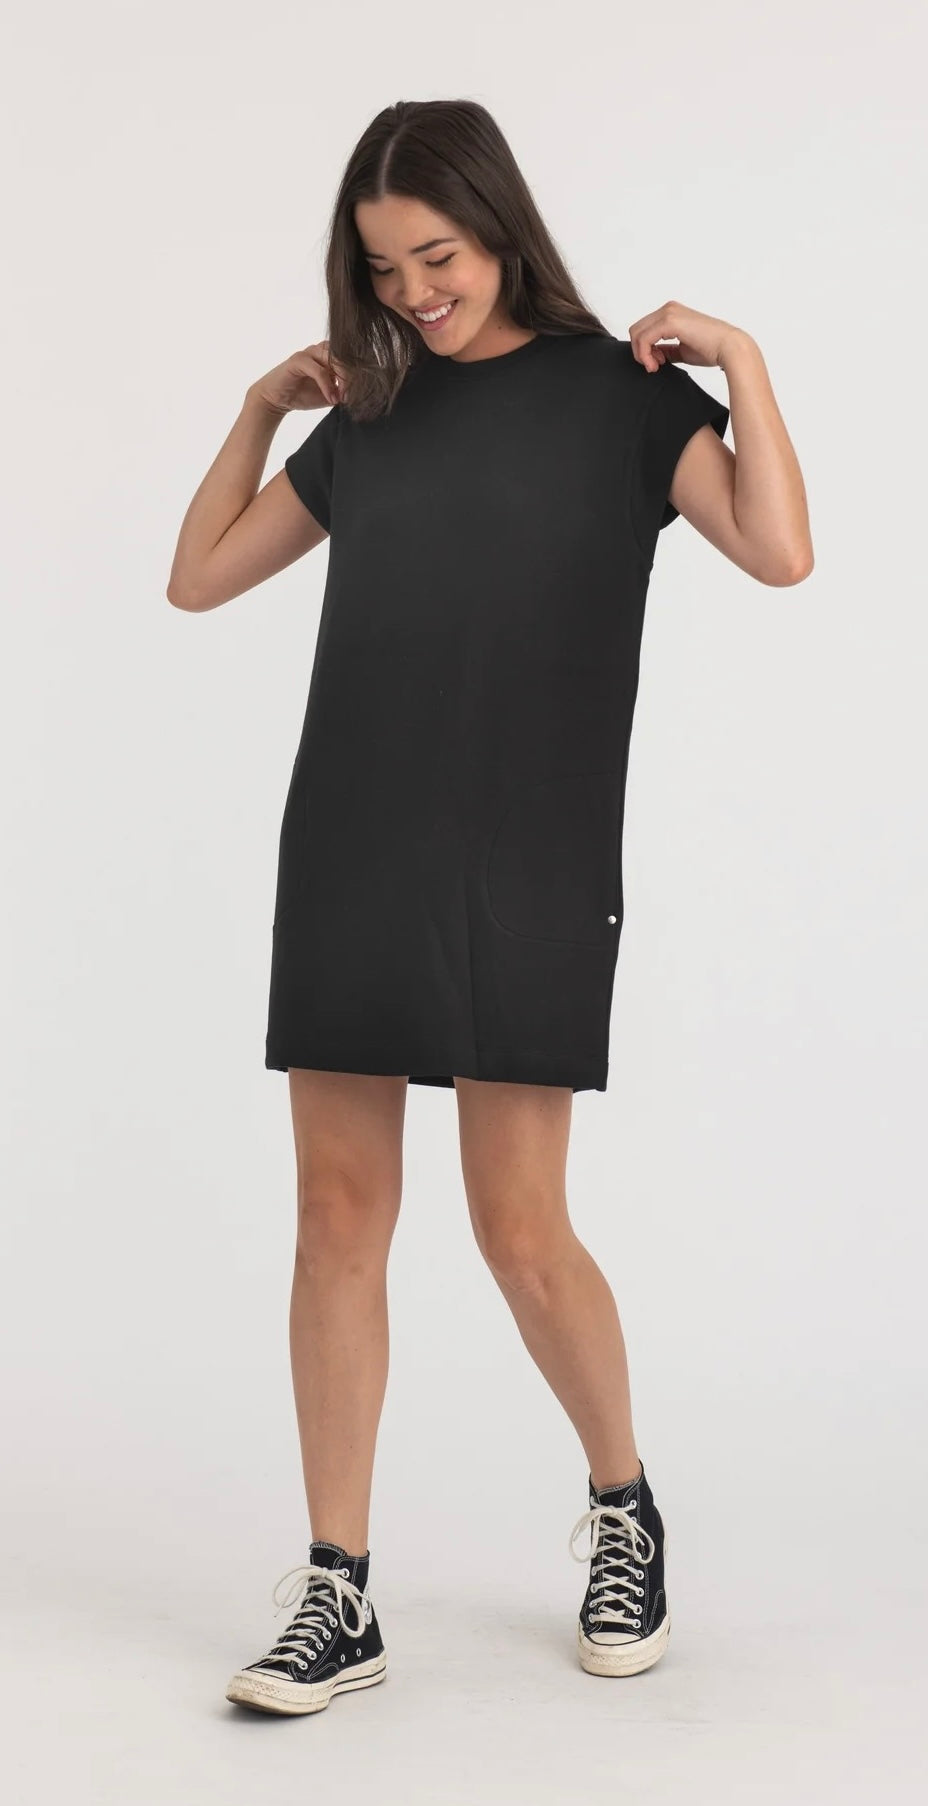 Orb- Shea- Supersoft Sweatfleece Dress- Black-L & 2XL left